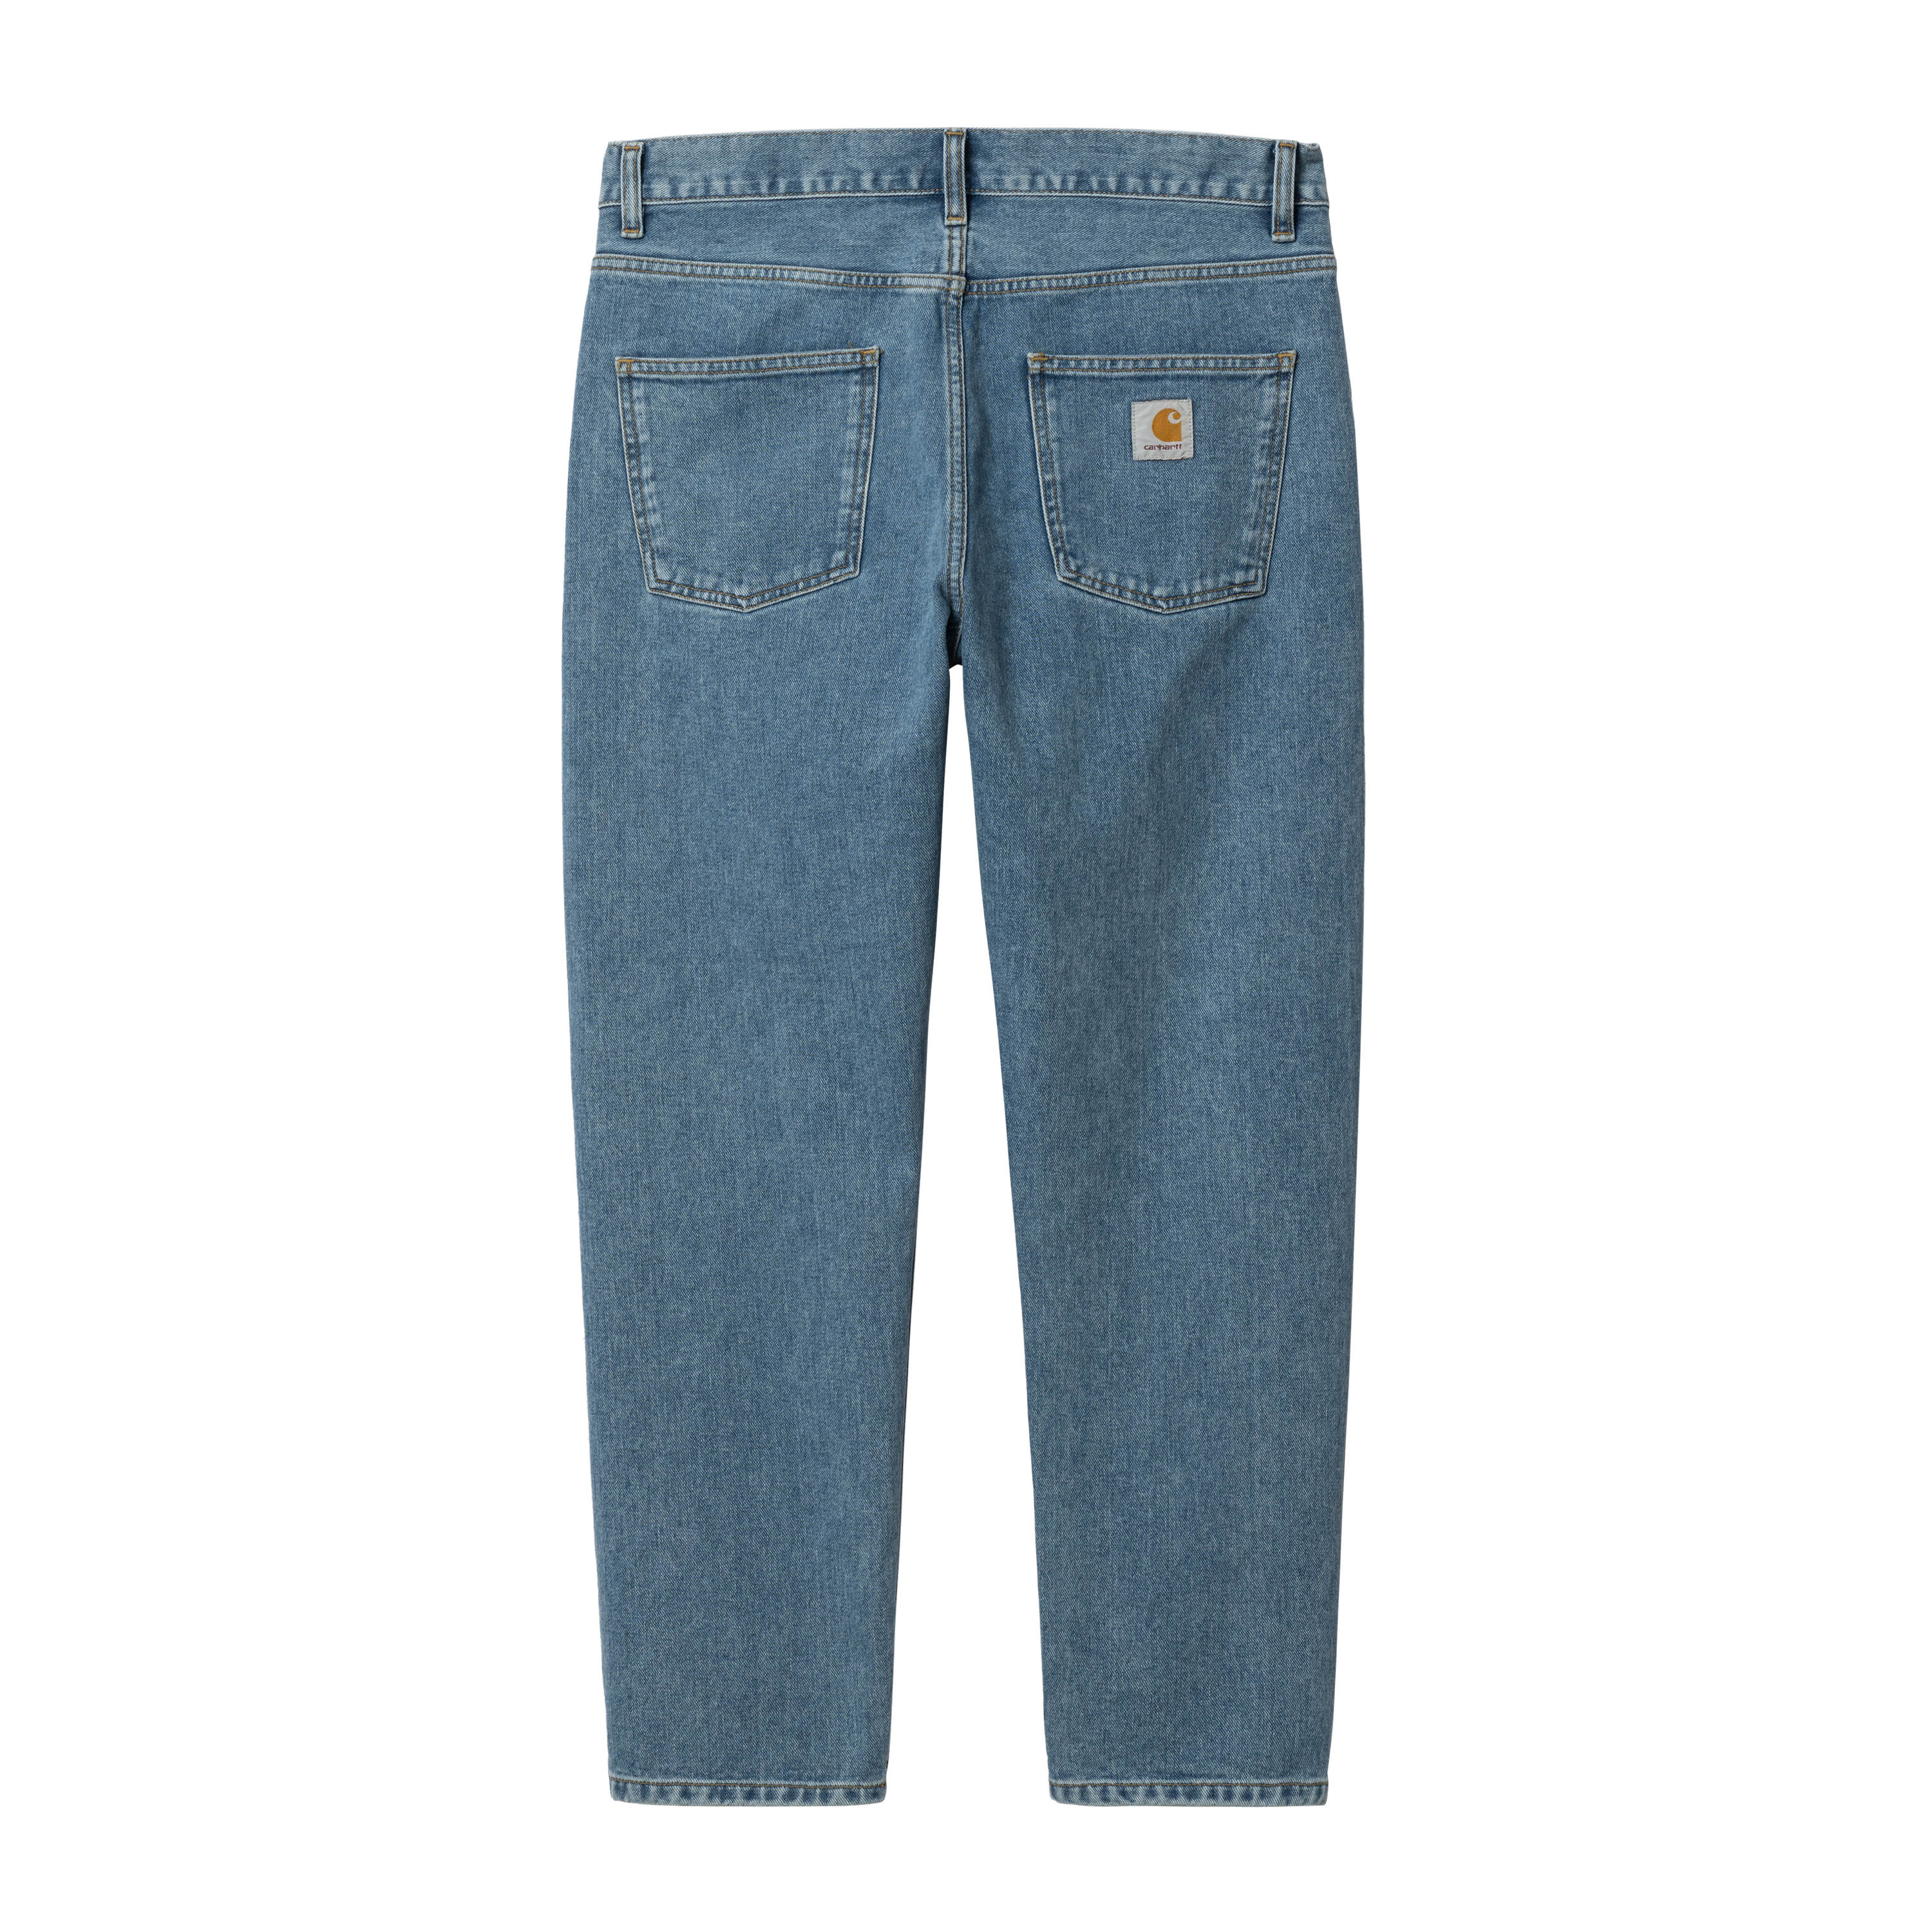 Vintage Carhartt Western Pant II Rare Faded Jeans Workwear Retro Straight  Regular Fit Rugged Dark Indigo Blue Denim Work Pants Size W29 L32 -   Portugal